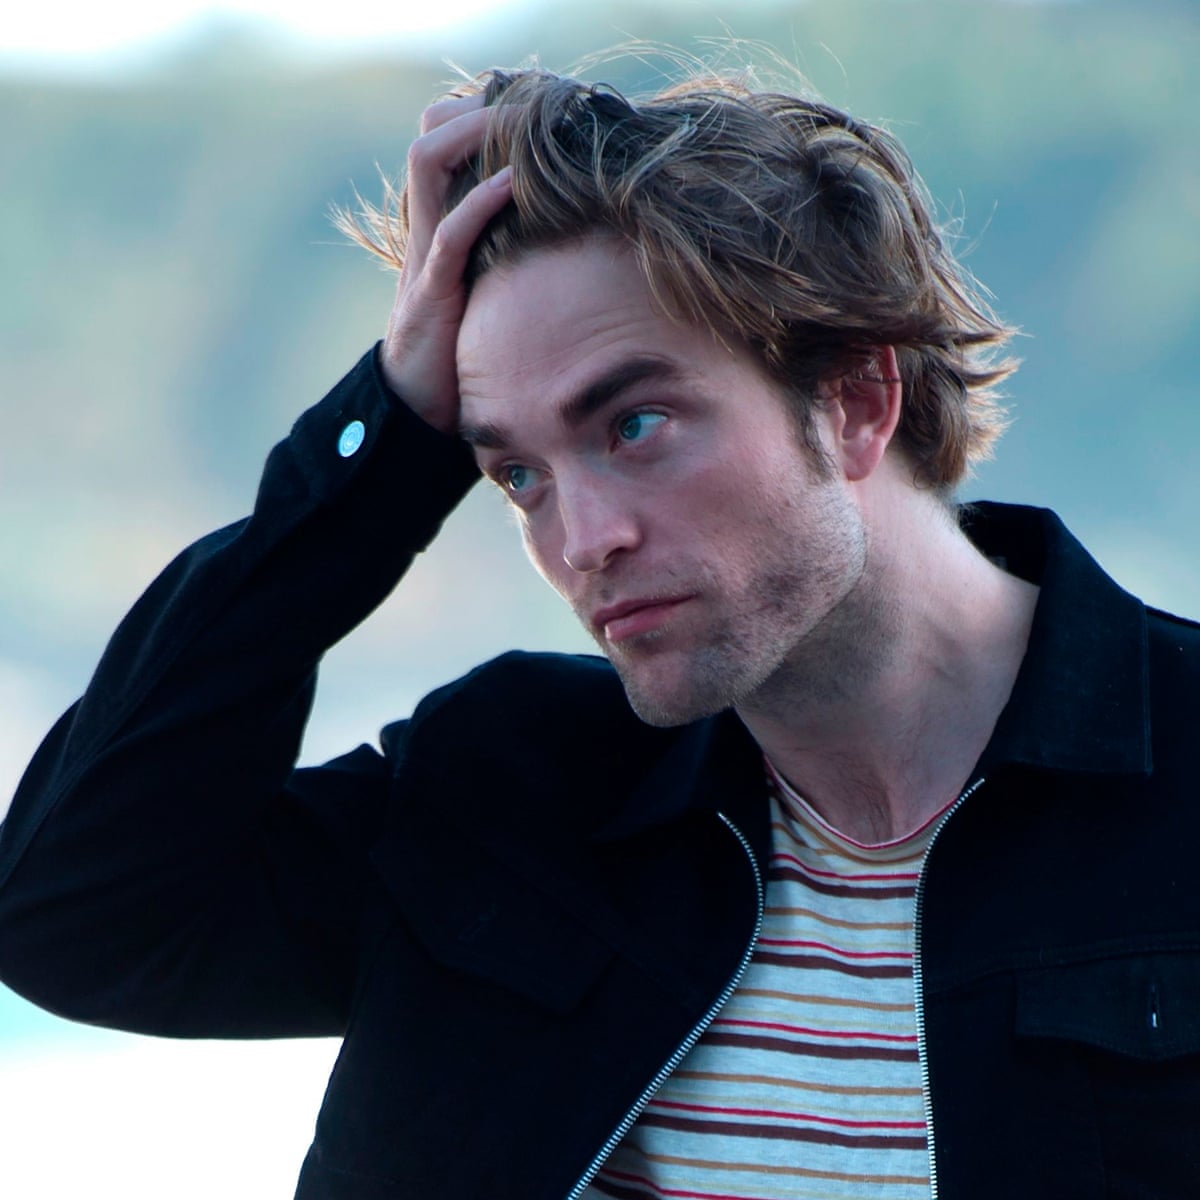 batman Star Robert Pattinson Tests Positive For Covid19 Robert Pattinson The Guardian